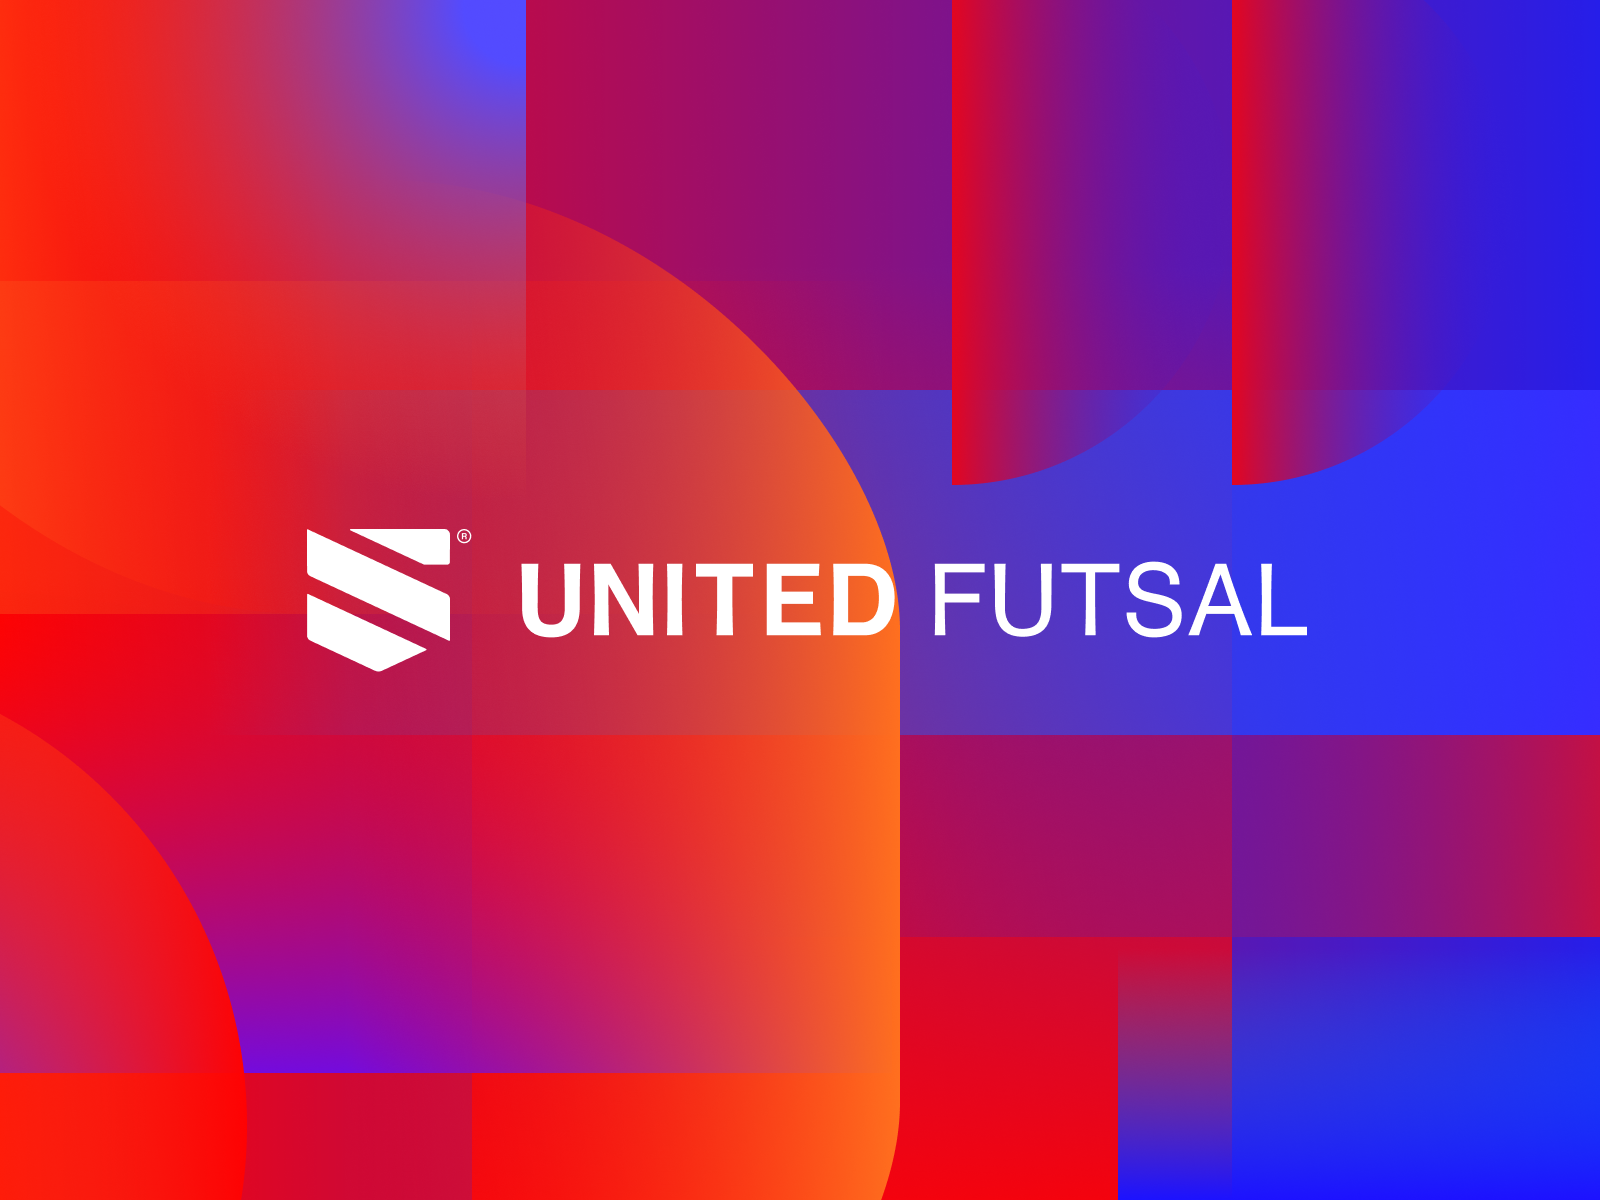 United Futsal by Julia Dmitrievna for Geex Arts on Dribbble